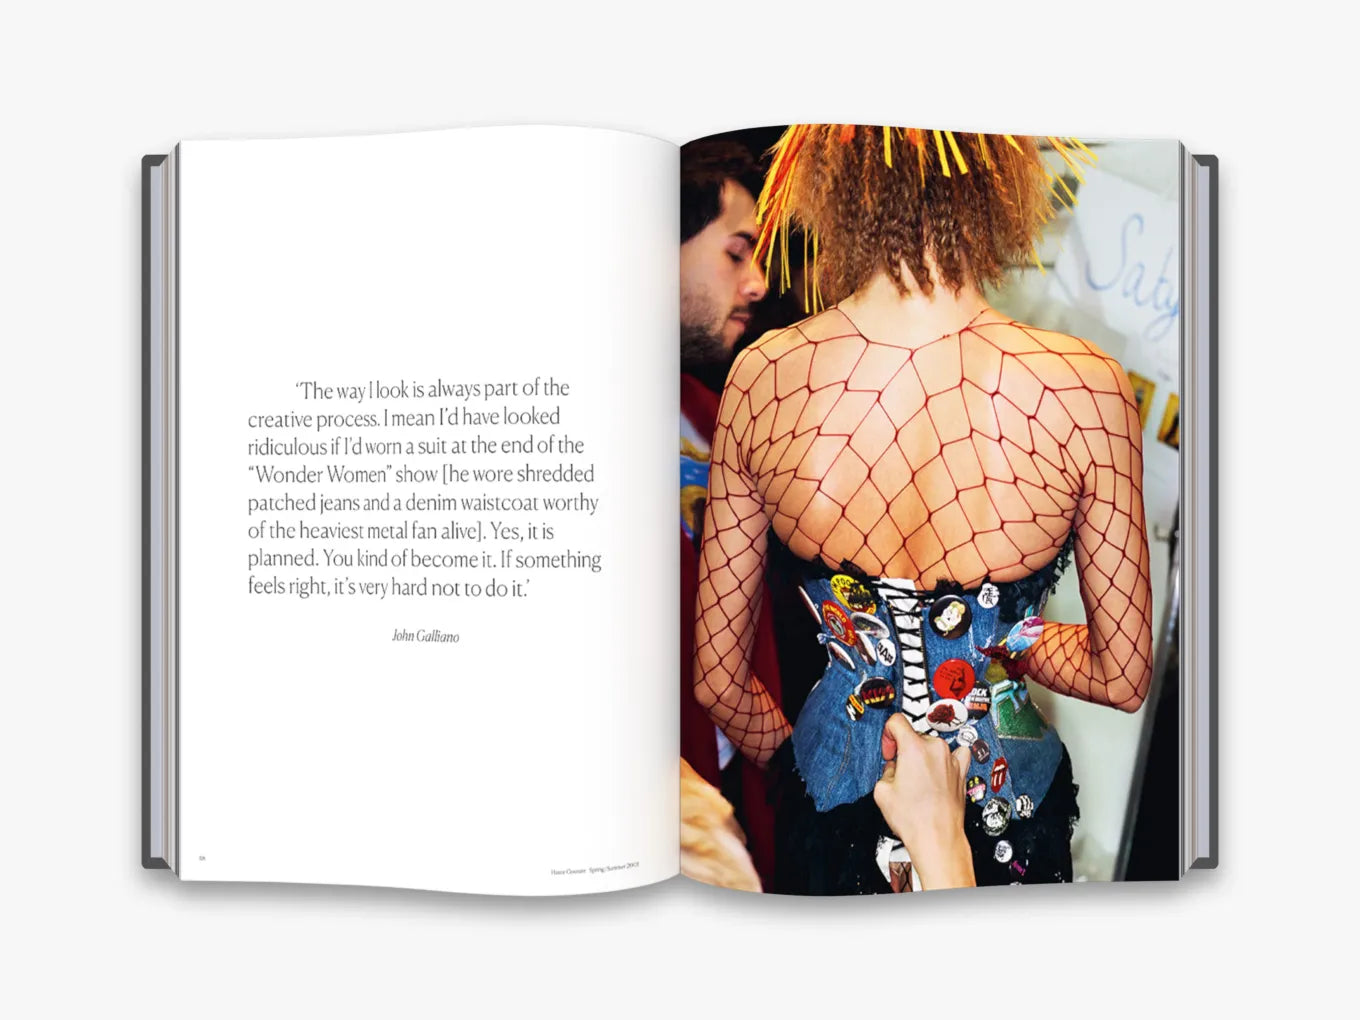 New Dior Book Focuses on the John Galliano Years – WWD